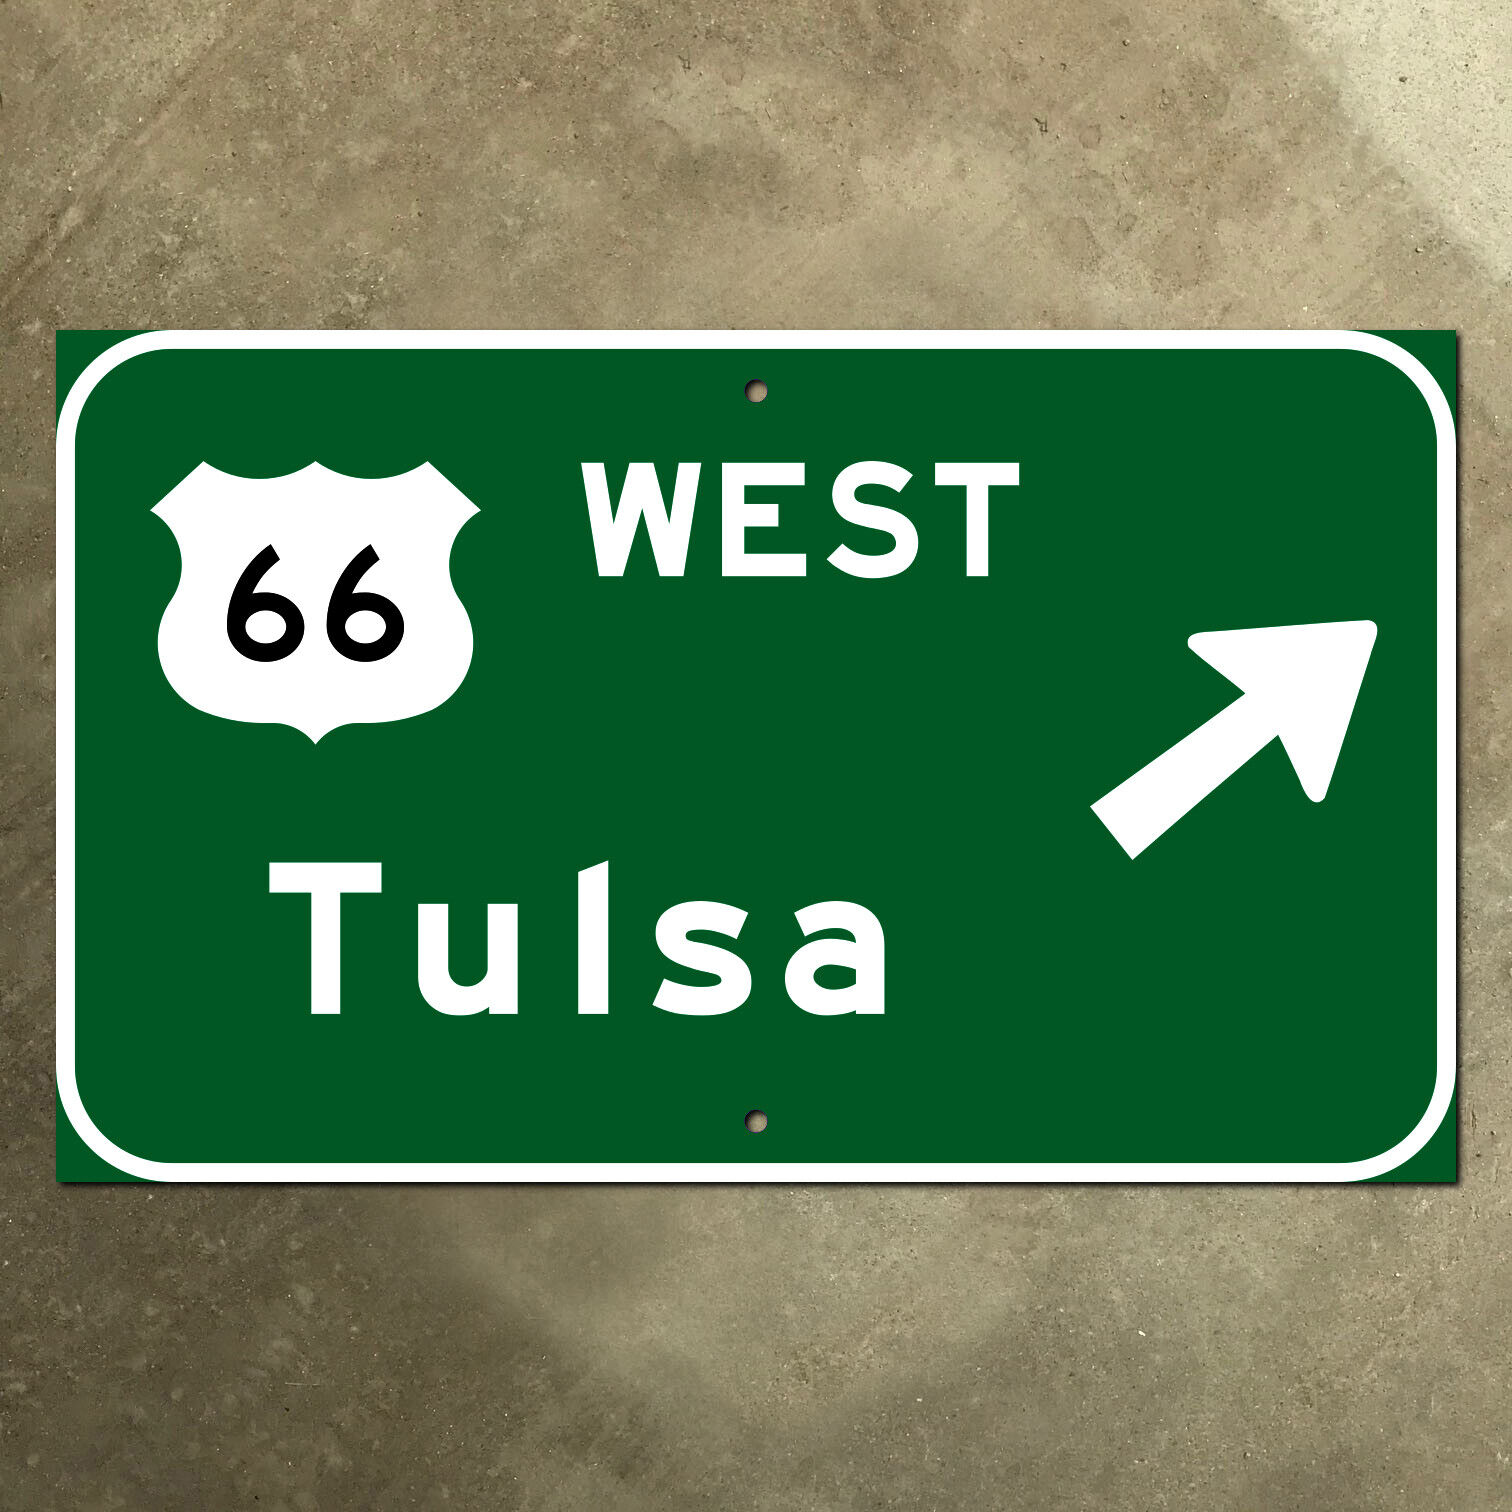 Oklahoma US 66 Tulsa highway road freeway guide sign green 1961 I-44 23x14